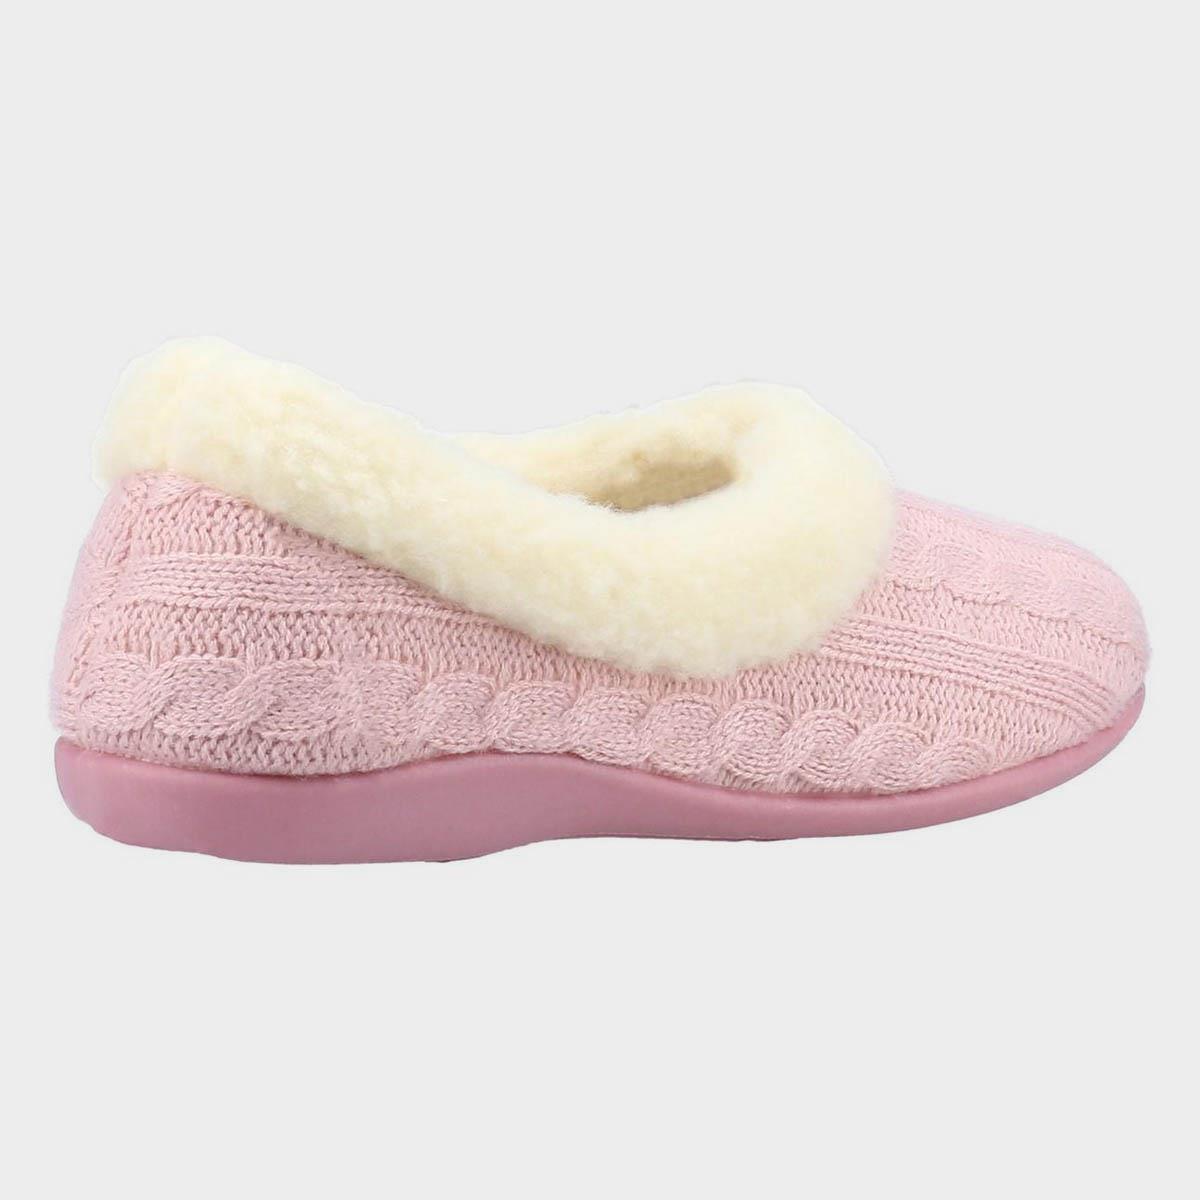 Fleet & Foster Sarina dark pink knitted warm lined memory foam slippers